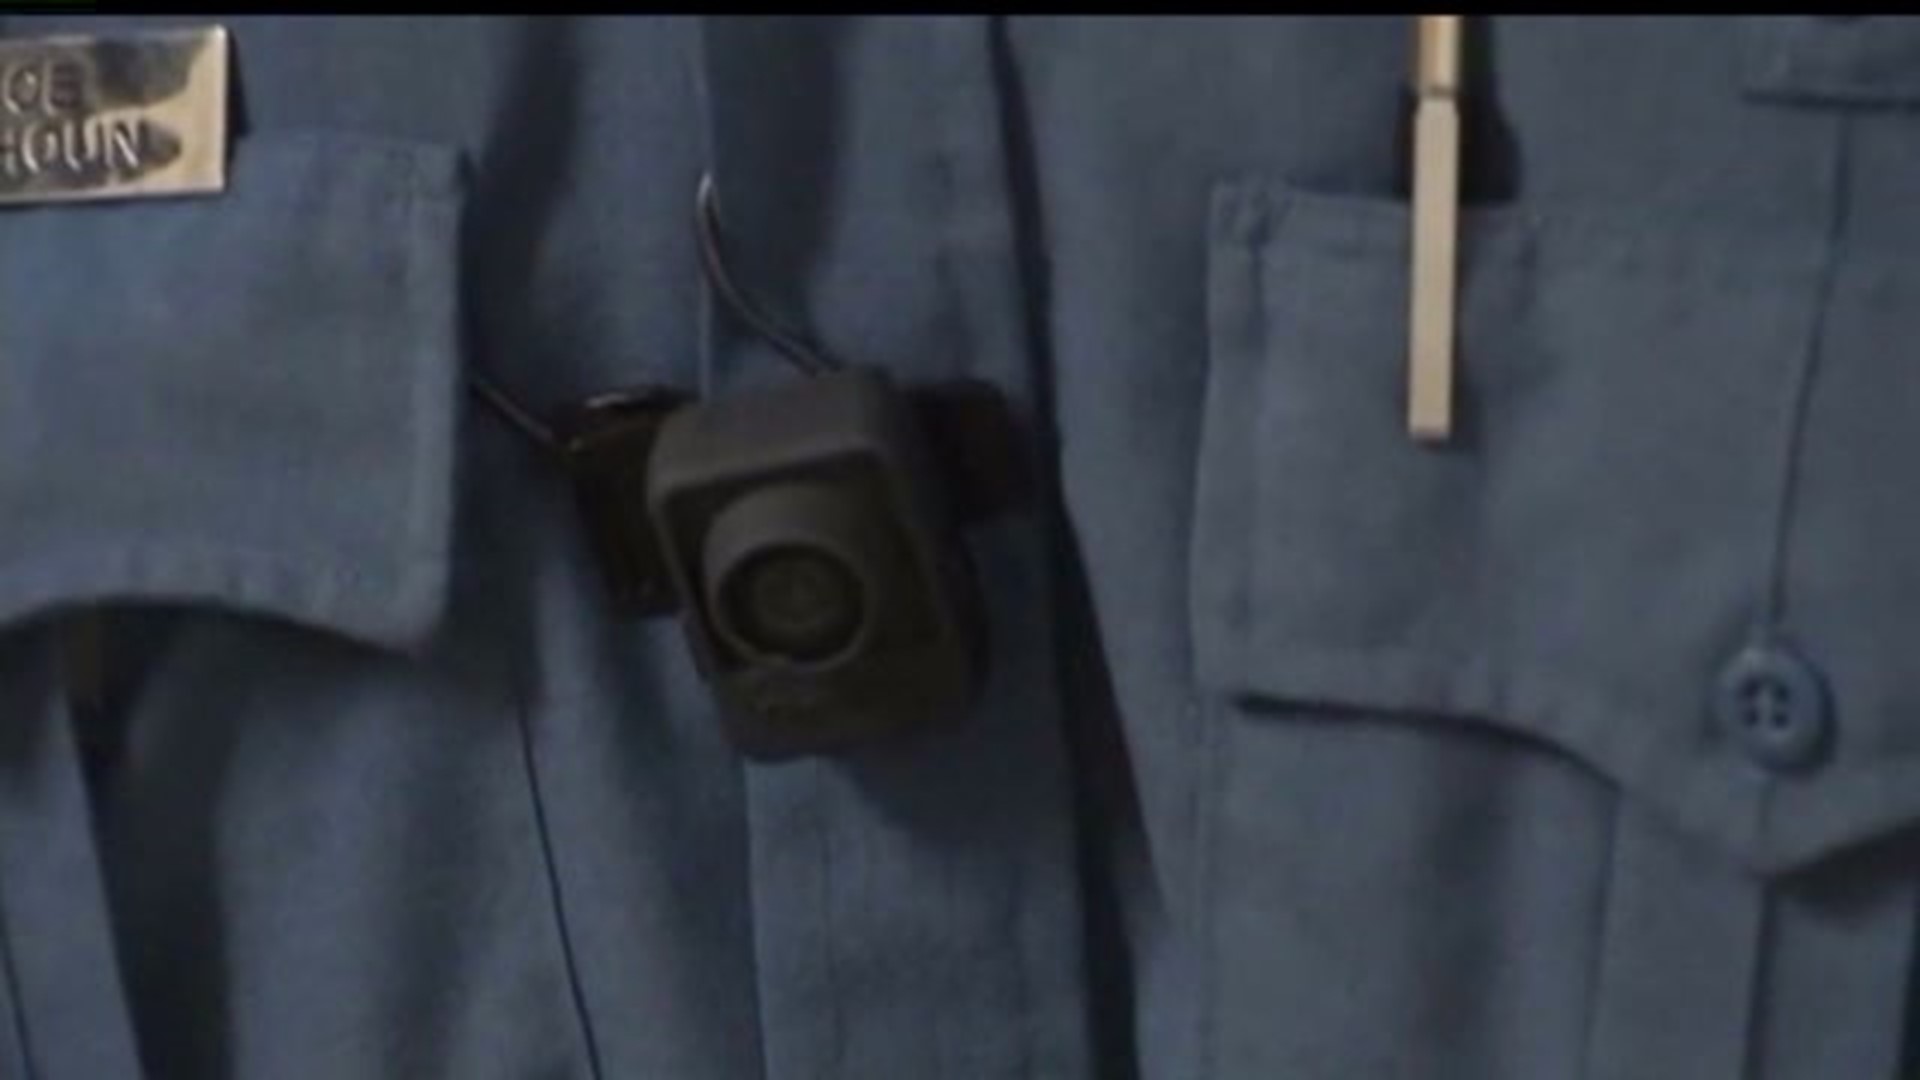 Body Cameras for Carlisle Police